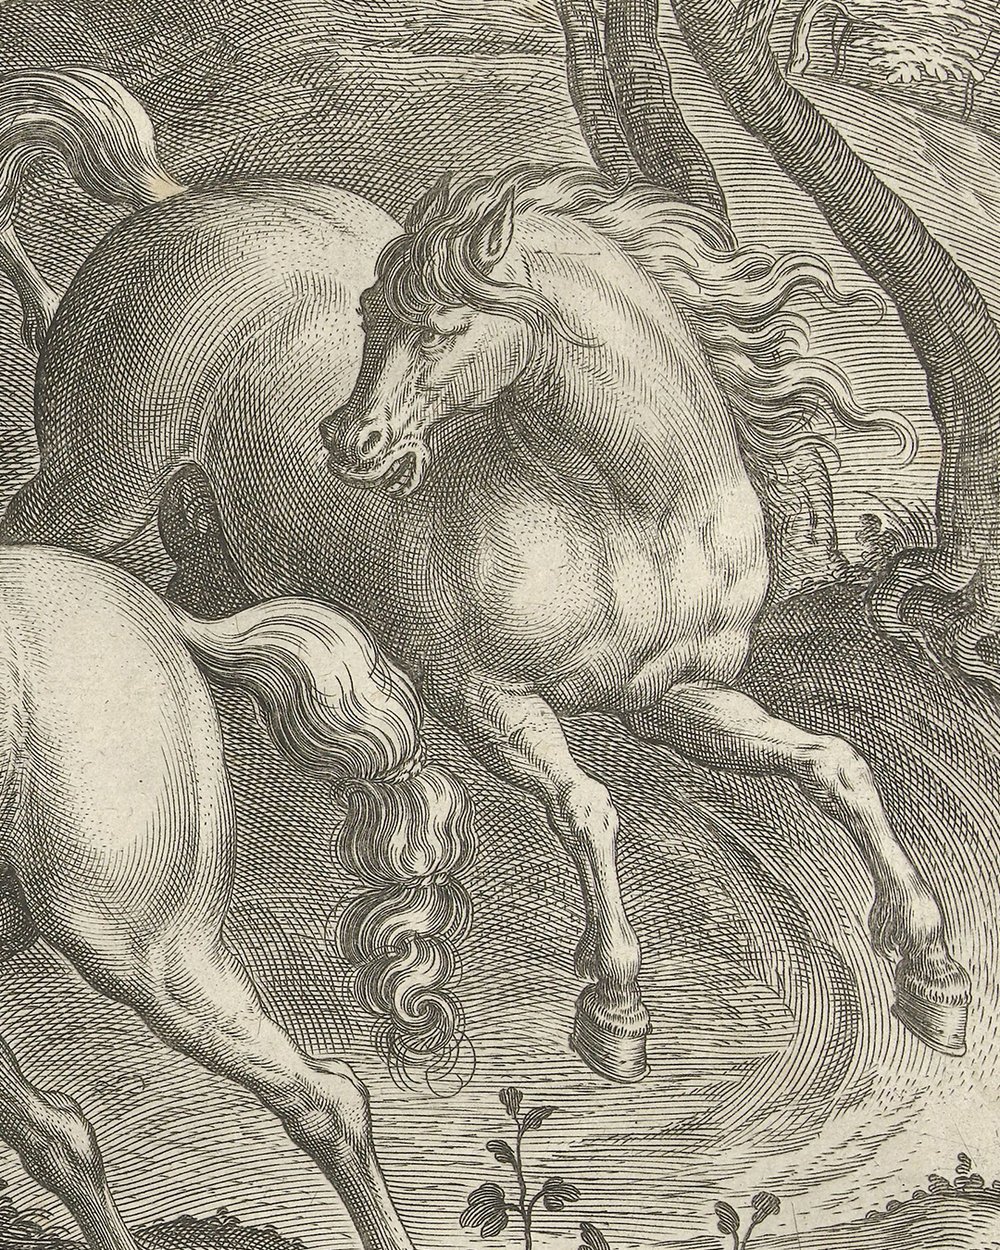 ''Six fighting horses'' (1578 - 1582)